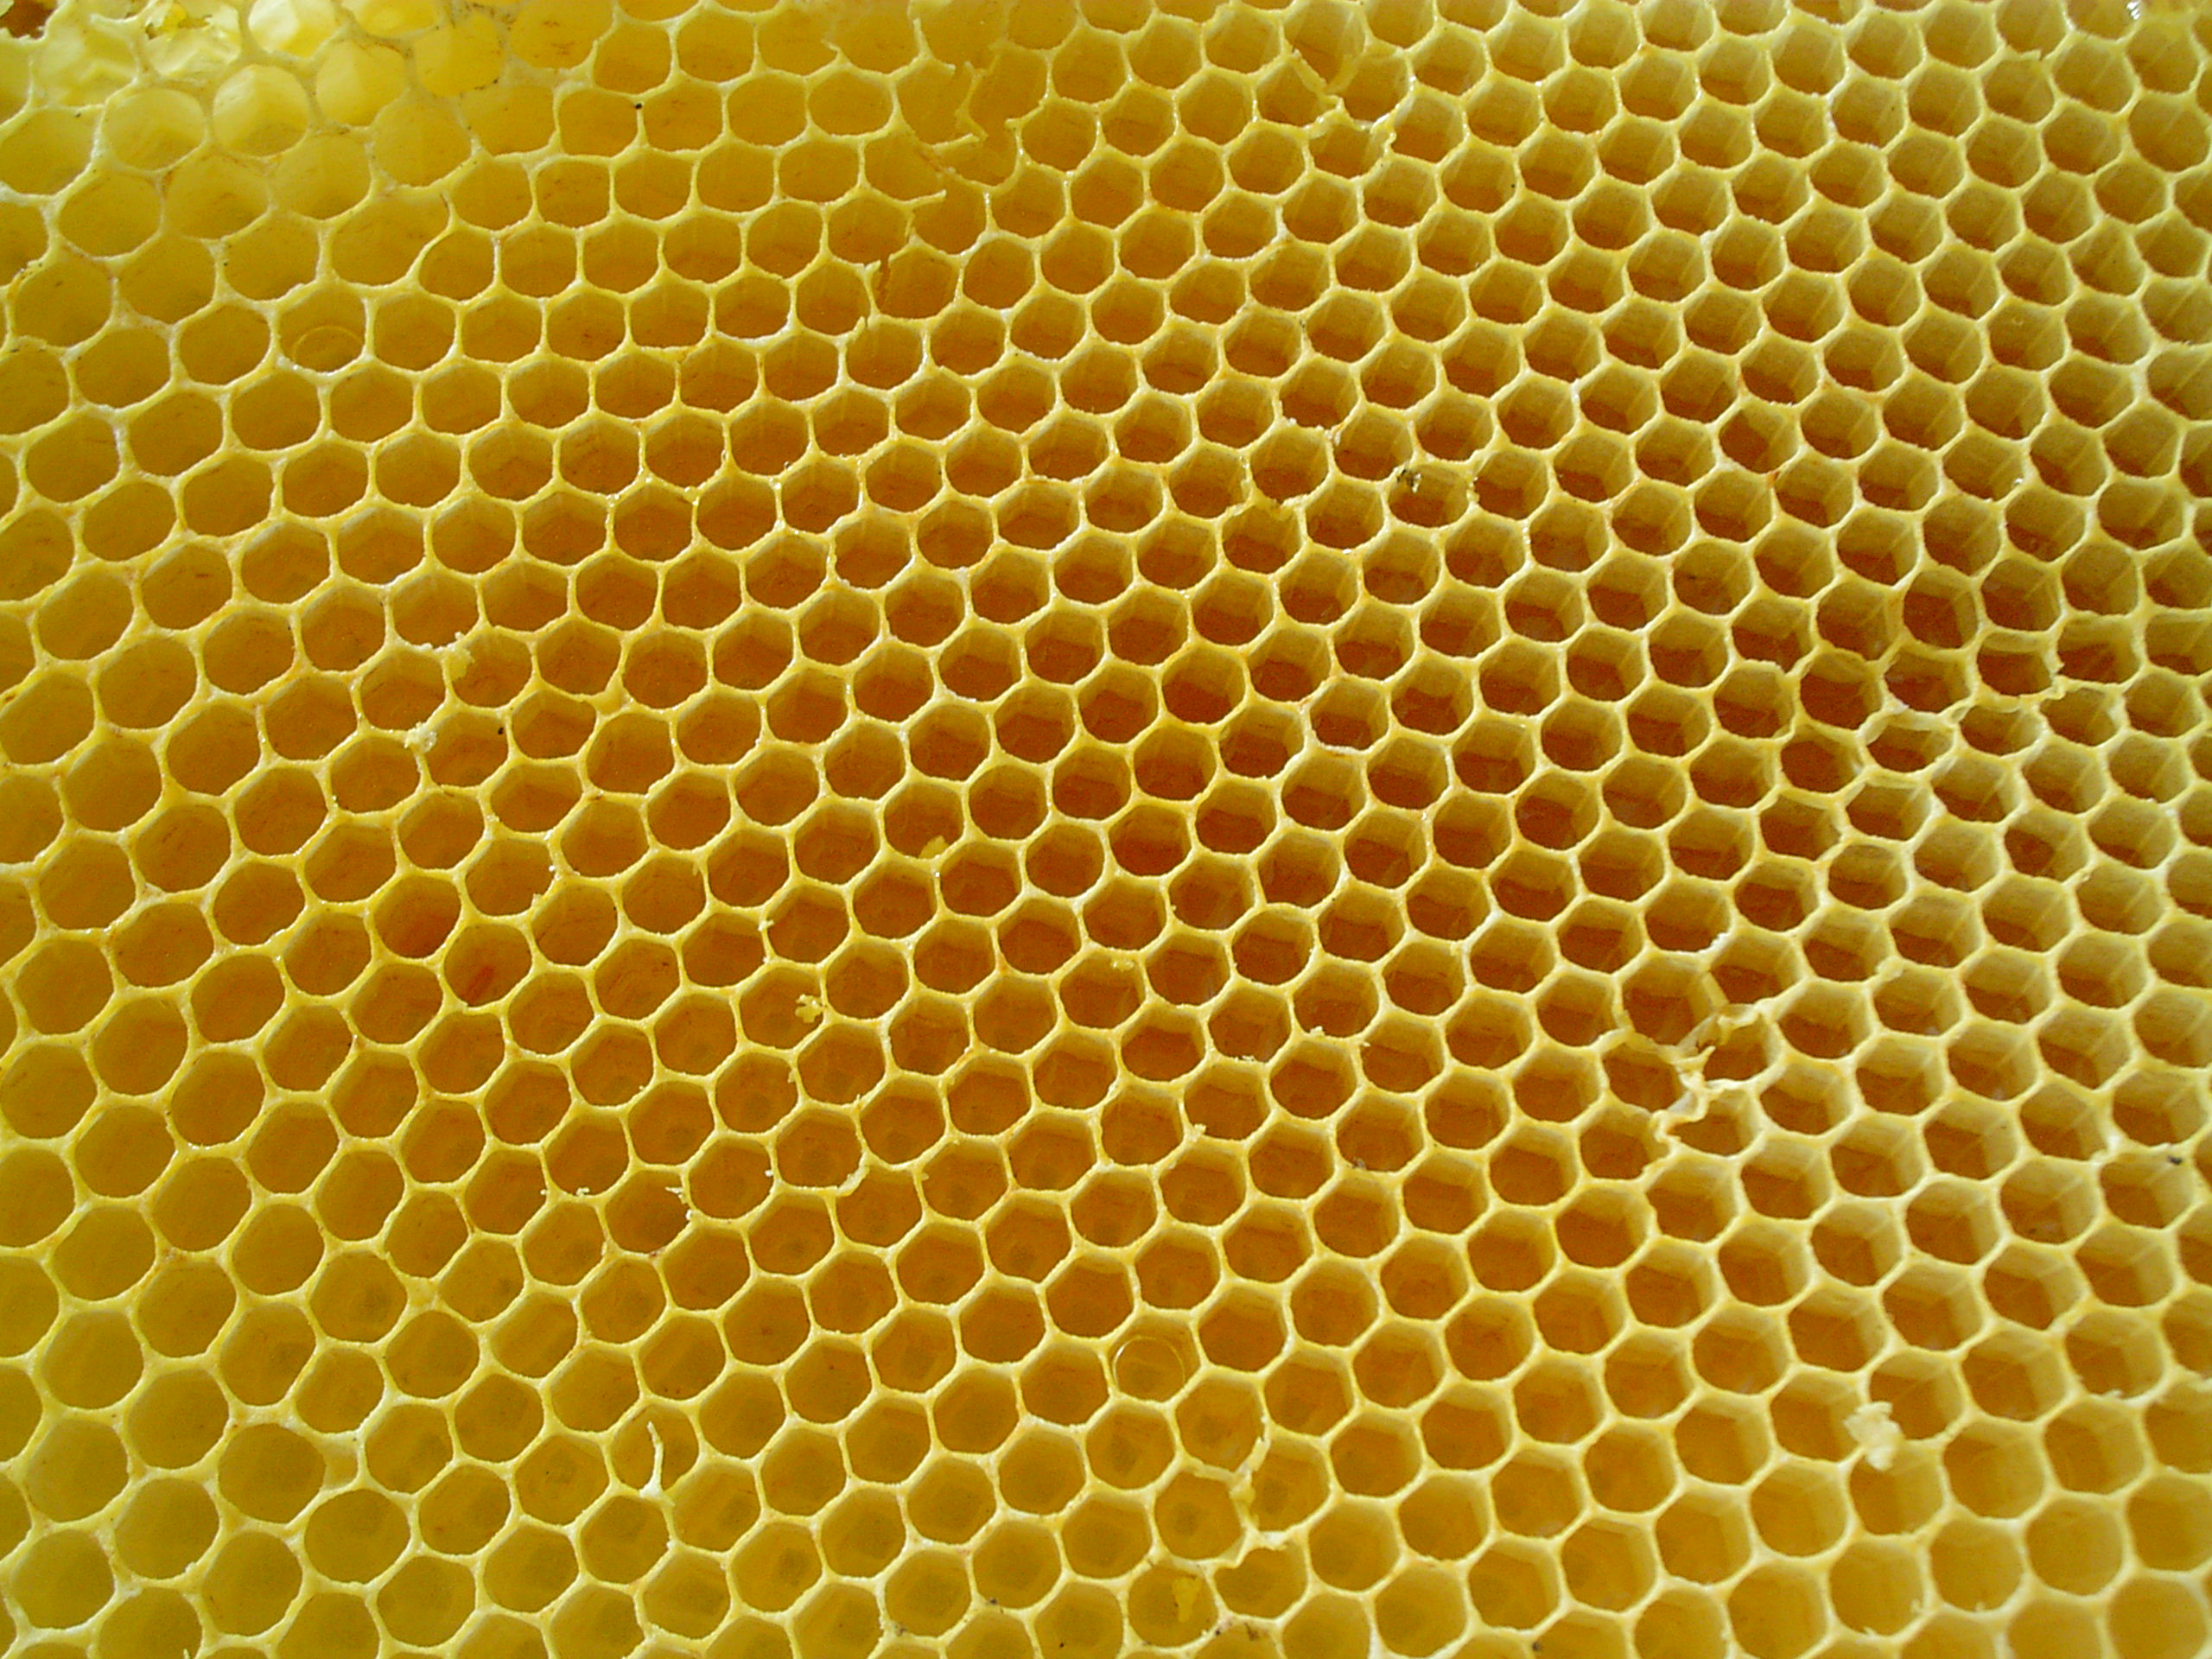 Honeycombs-rayons-de-miel-2